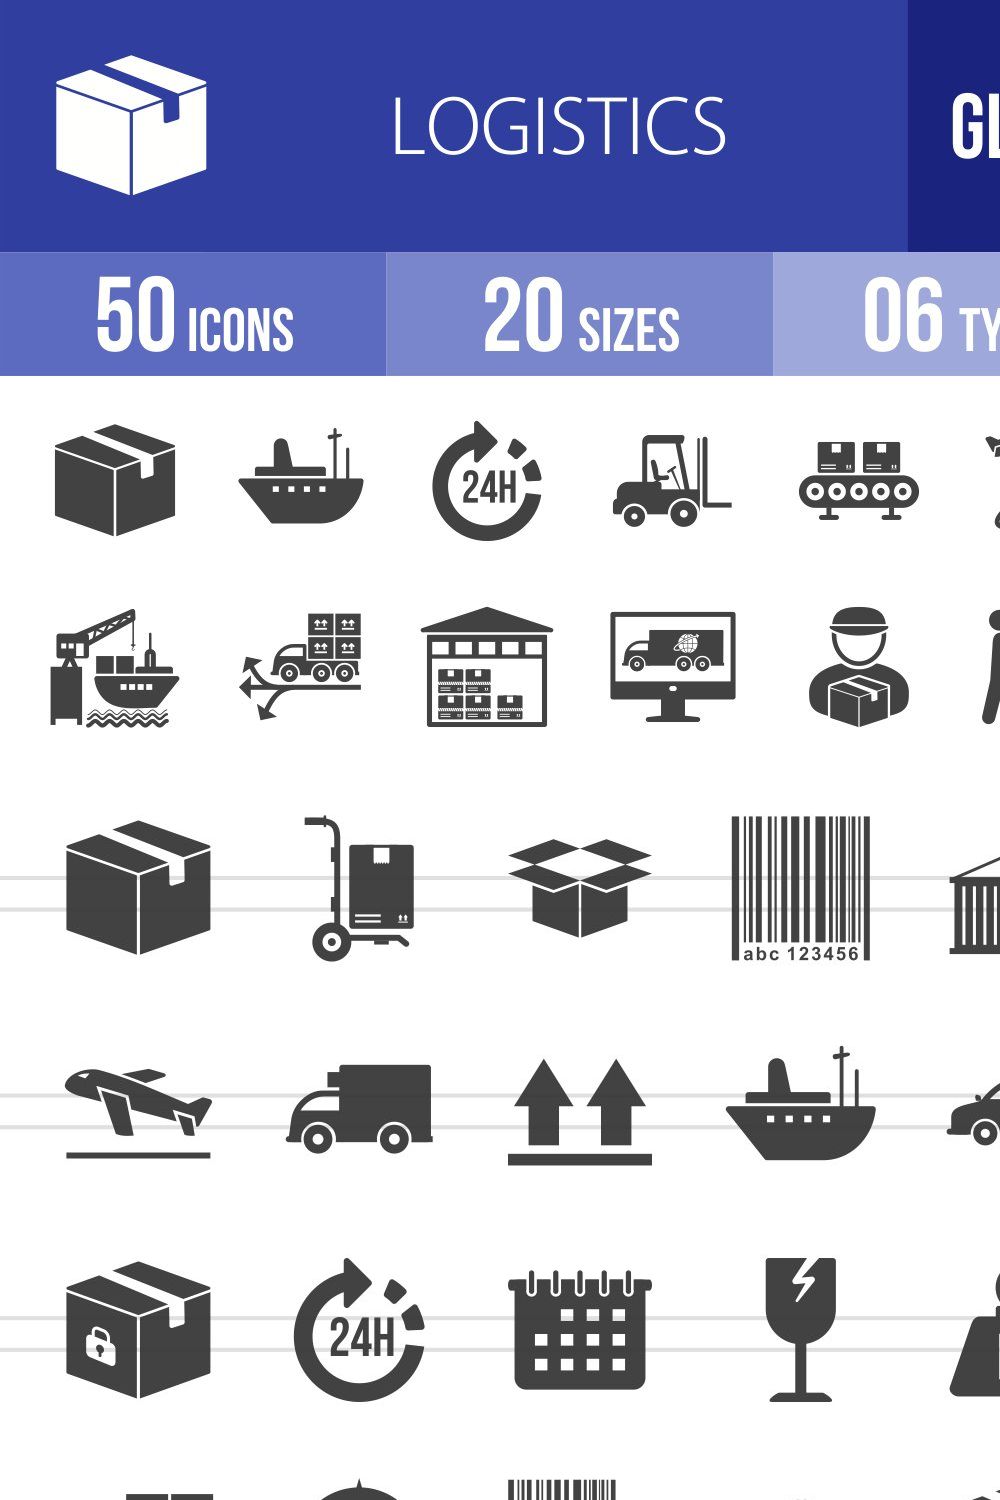 50 Logistics Glyph Icons pinterest preview image.